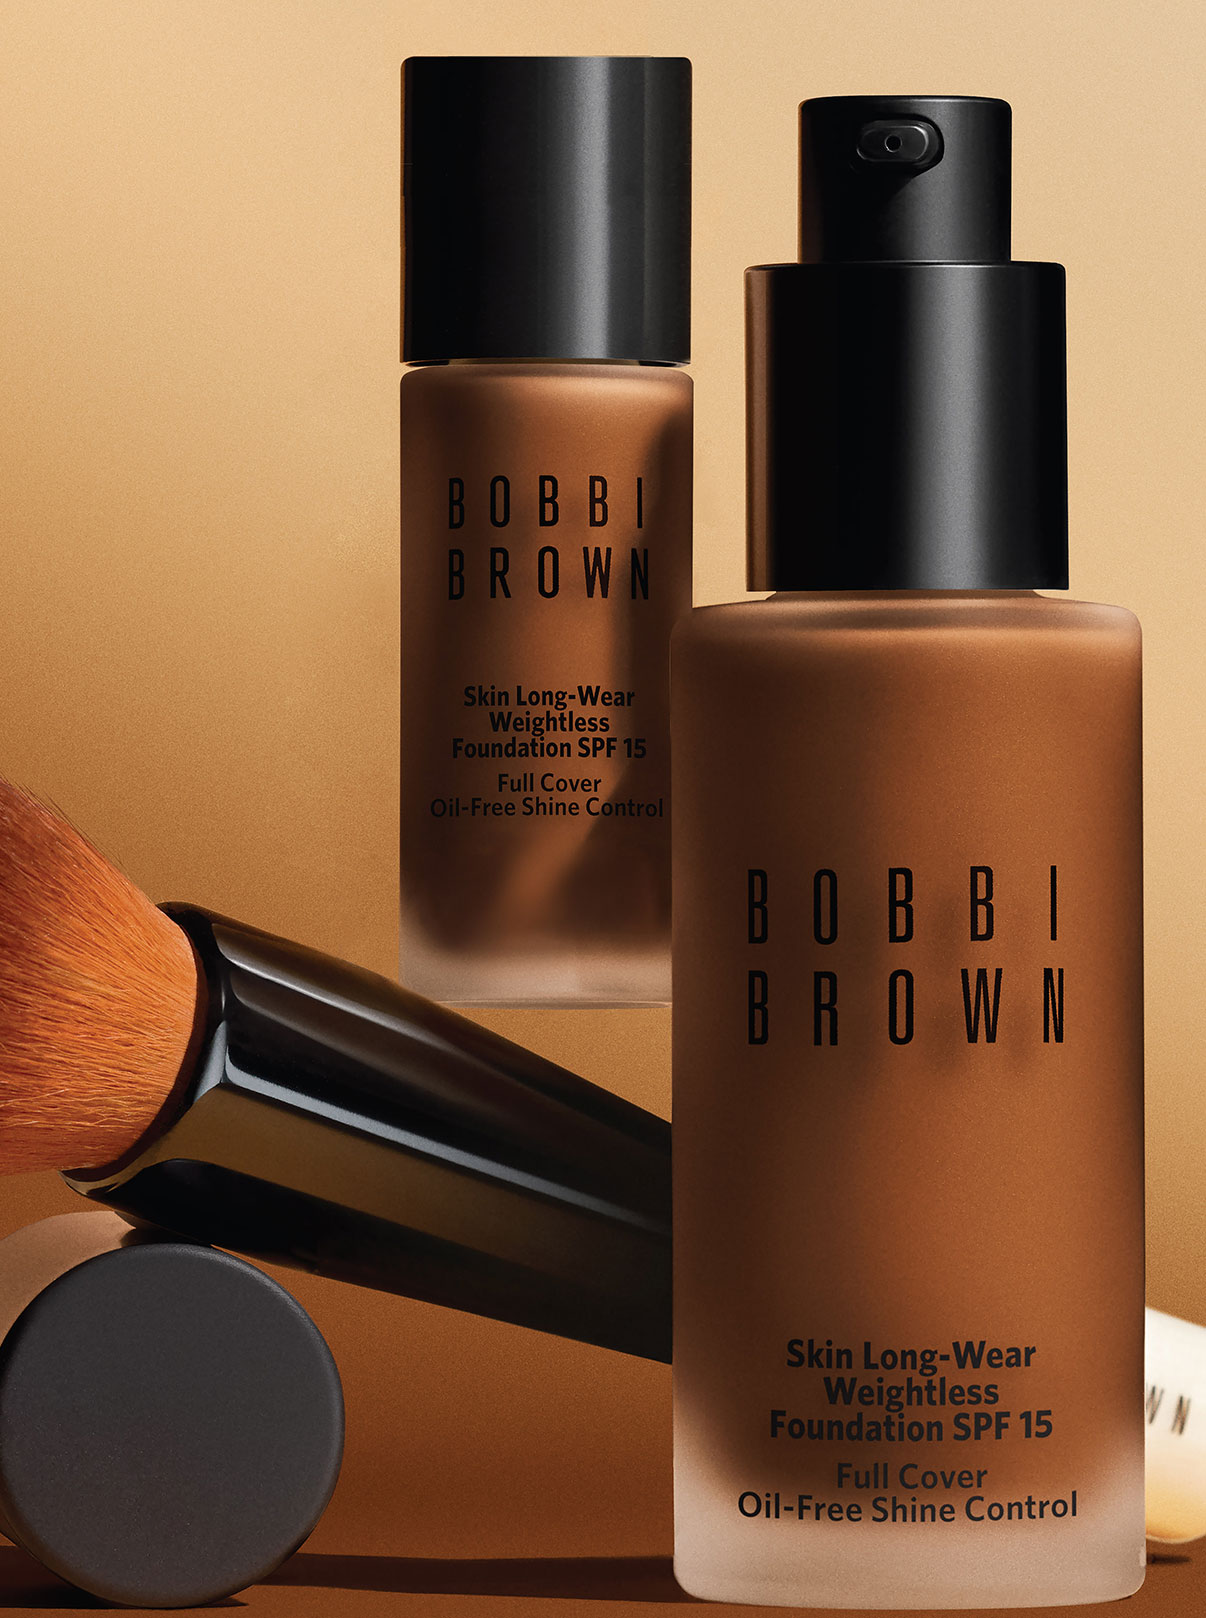 Exclusive Offers, Sales, Makeup Deals, Free Makeup | Bobbi Brown Australia